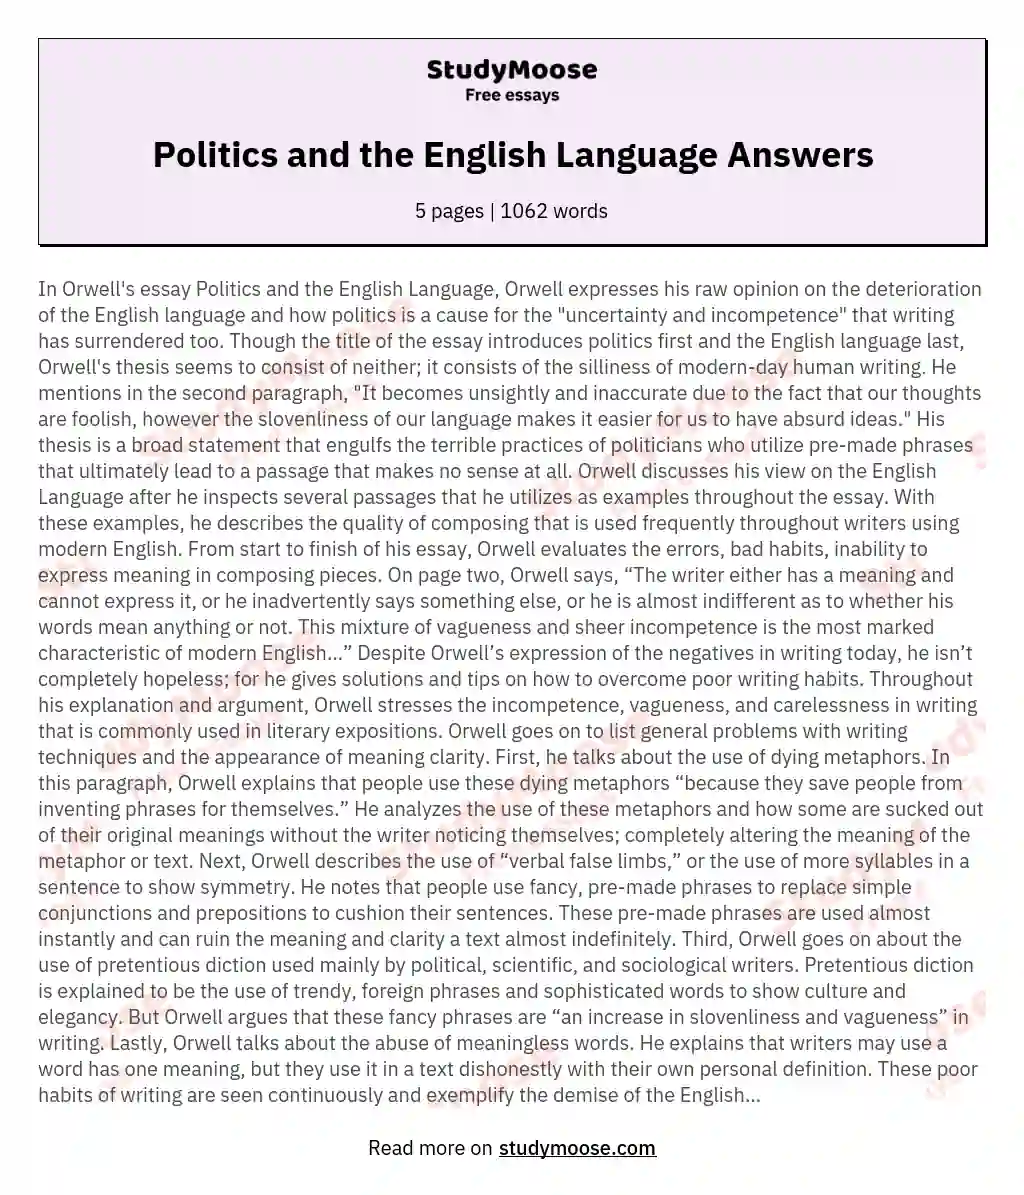 Politics and the English Language Answers essay